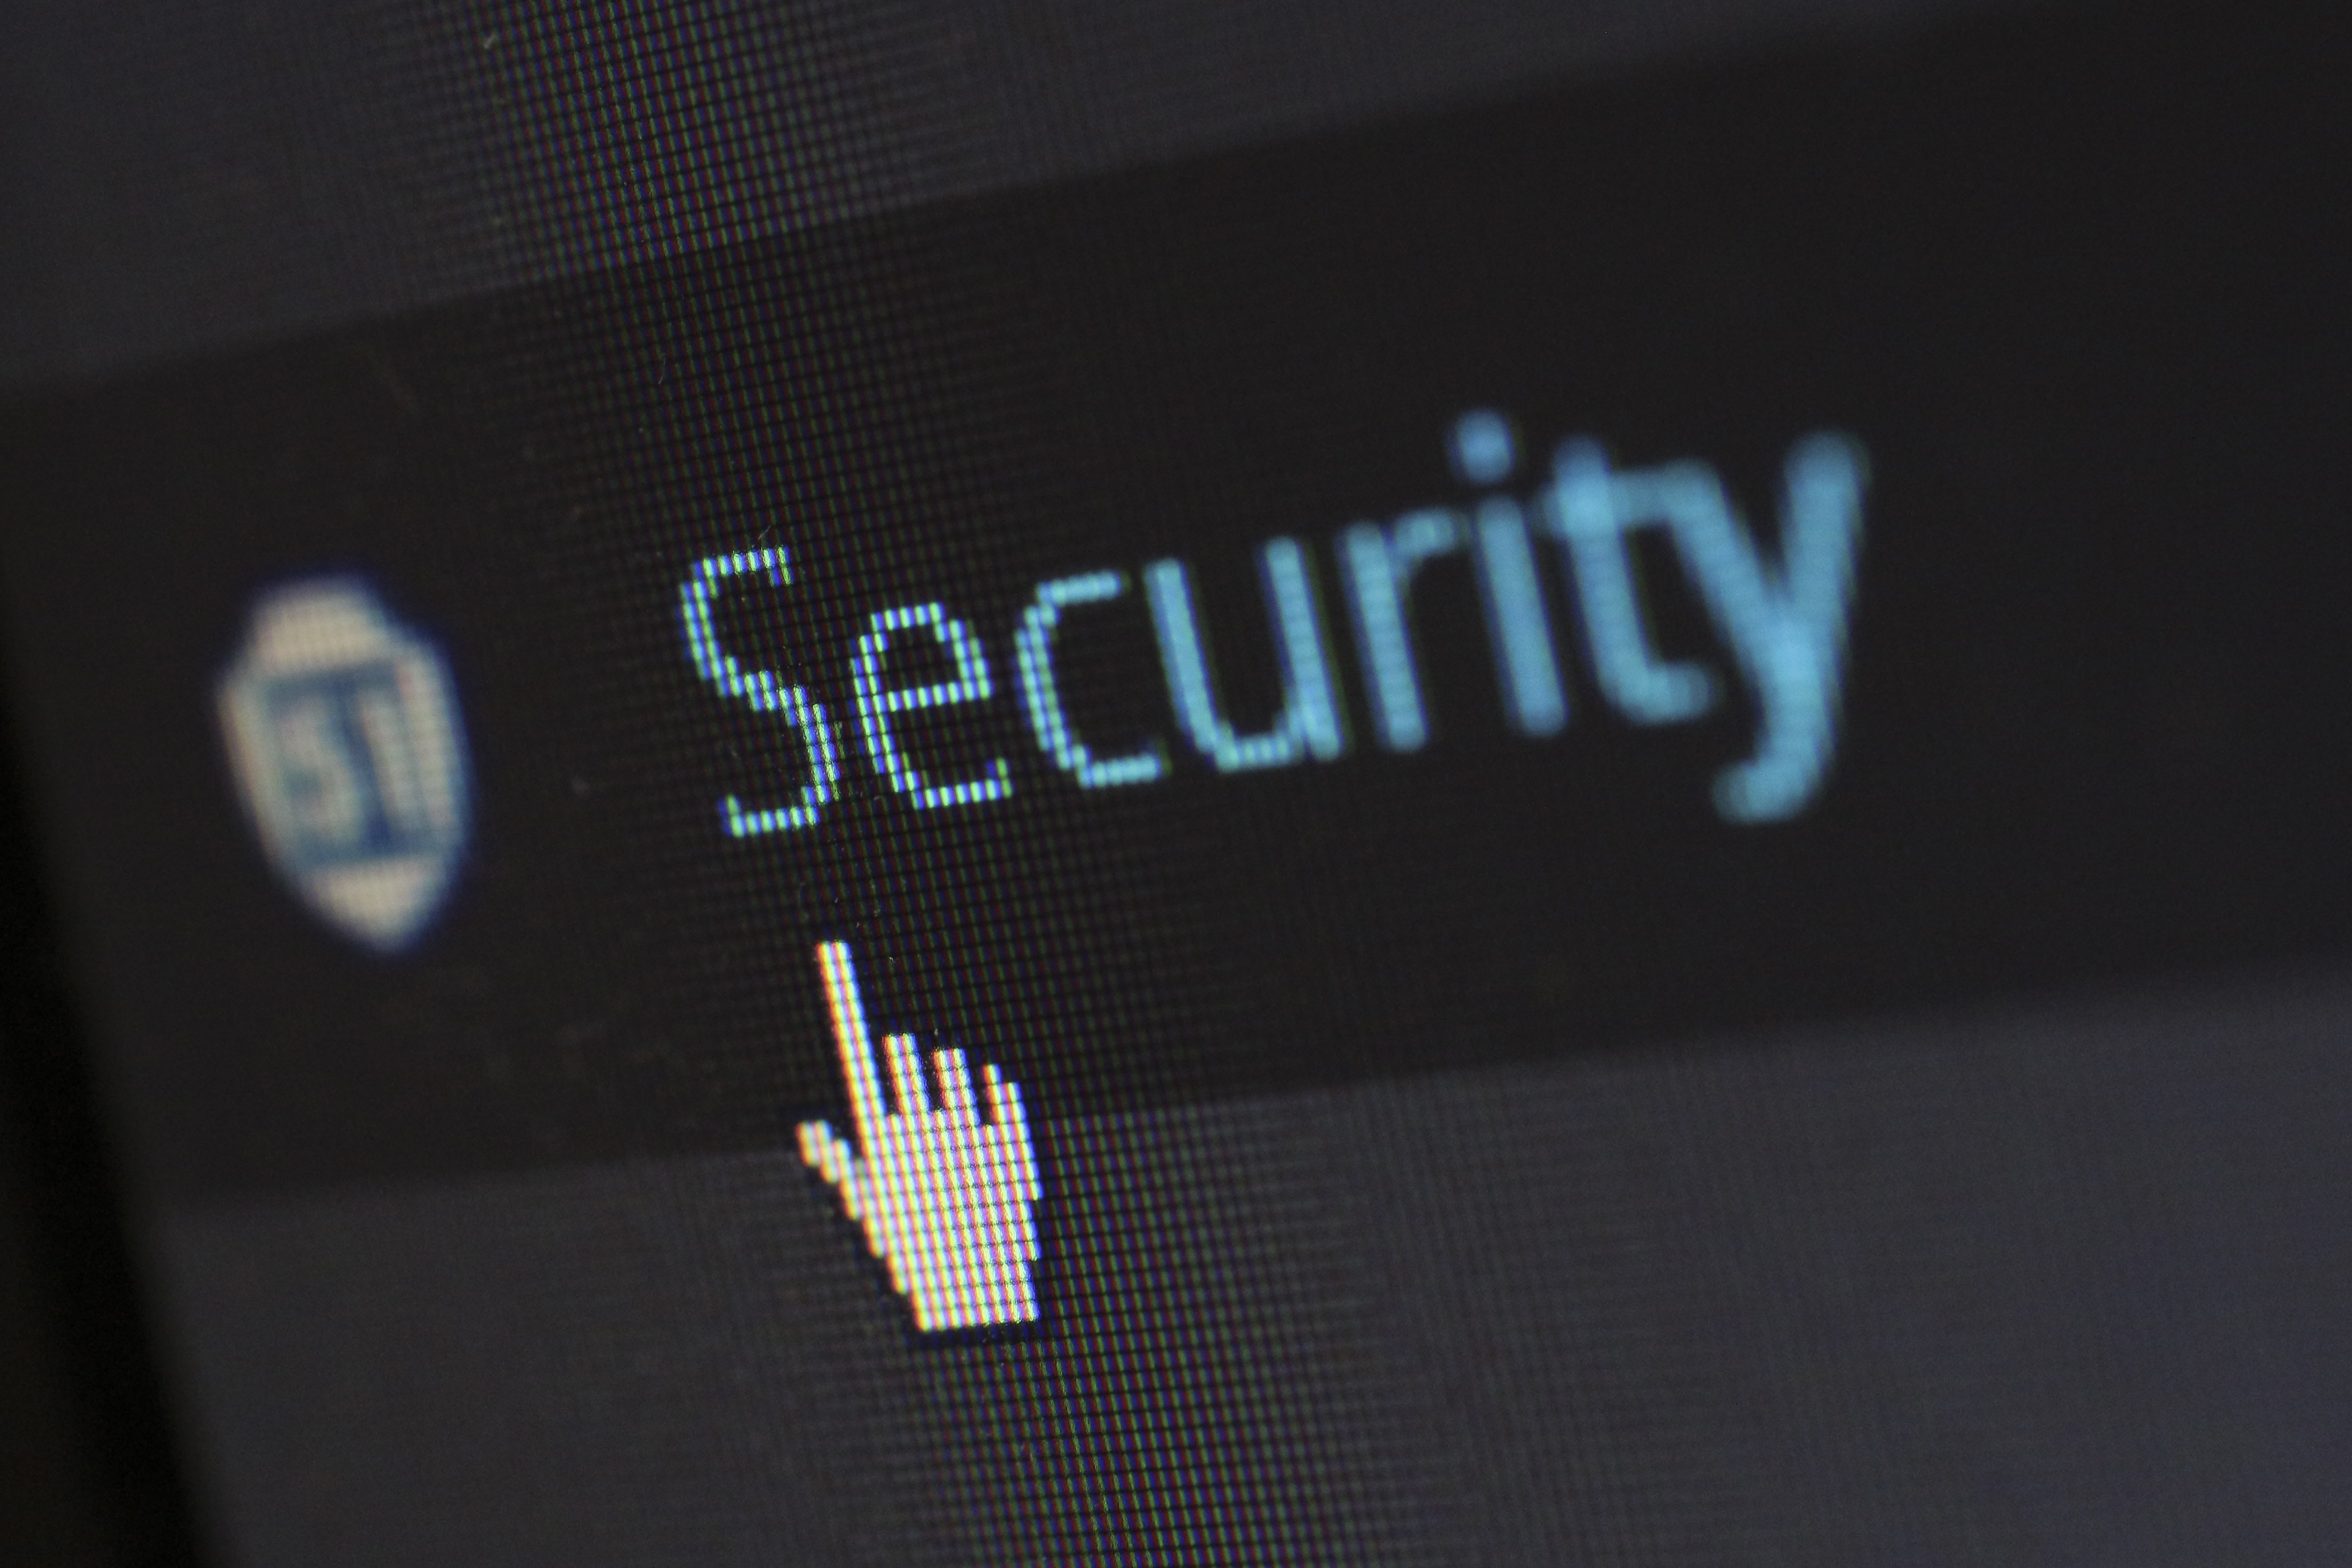 Internet security threats